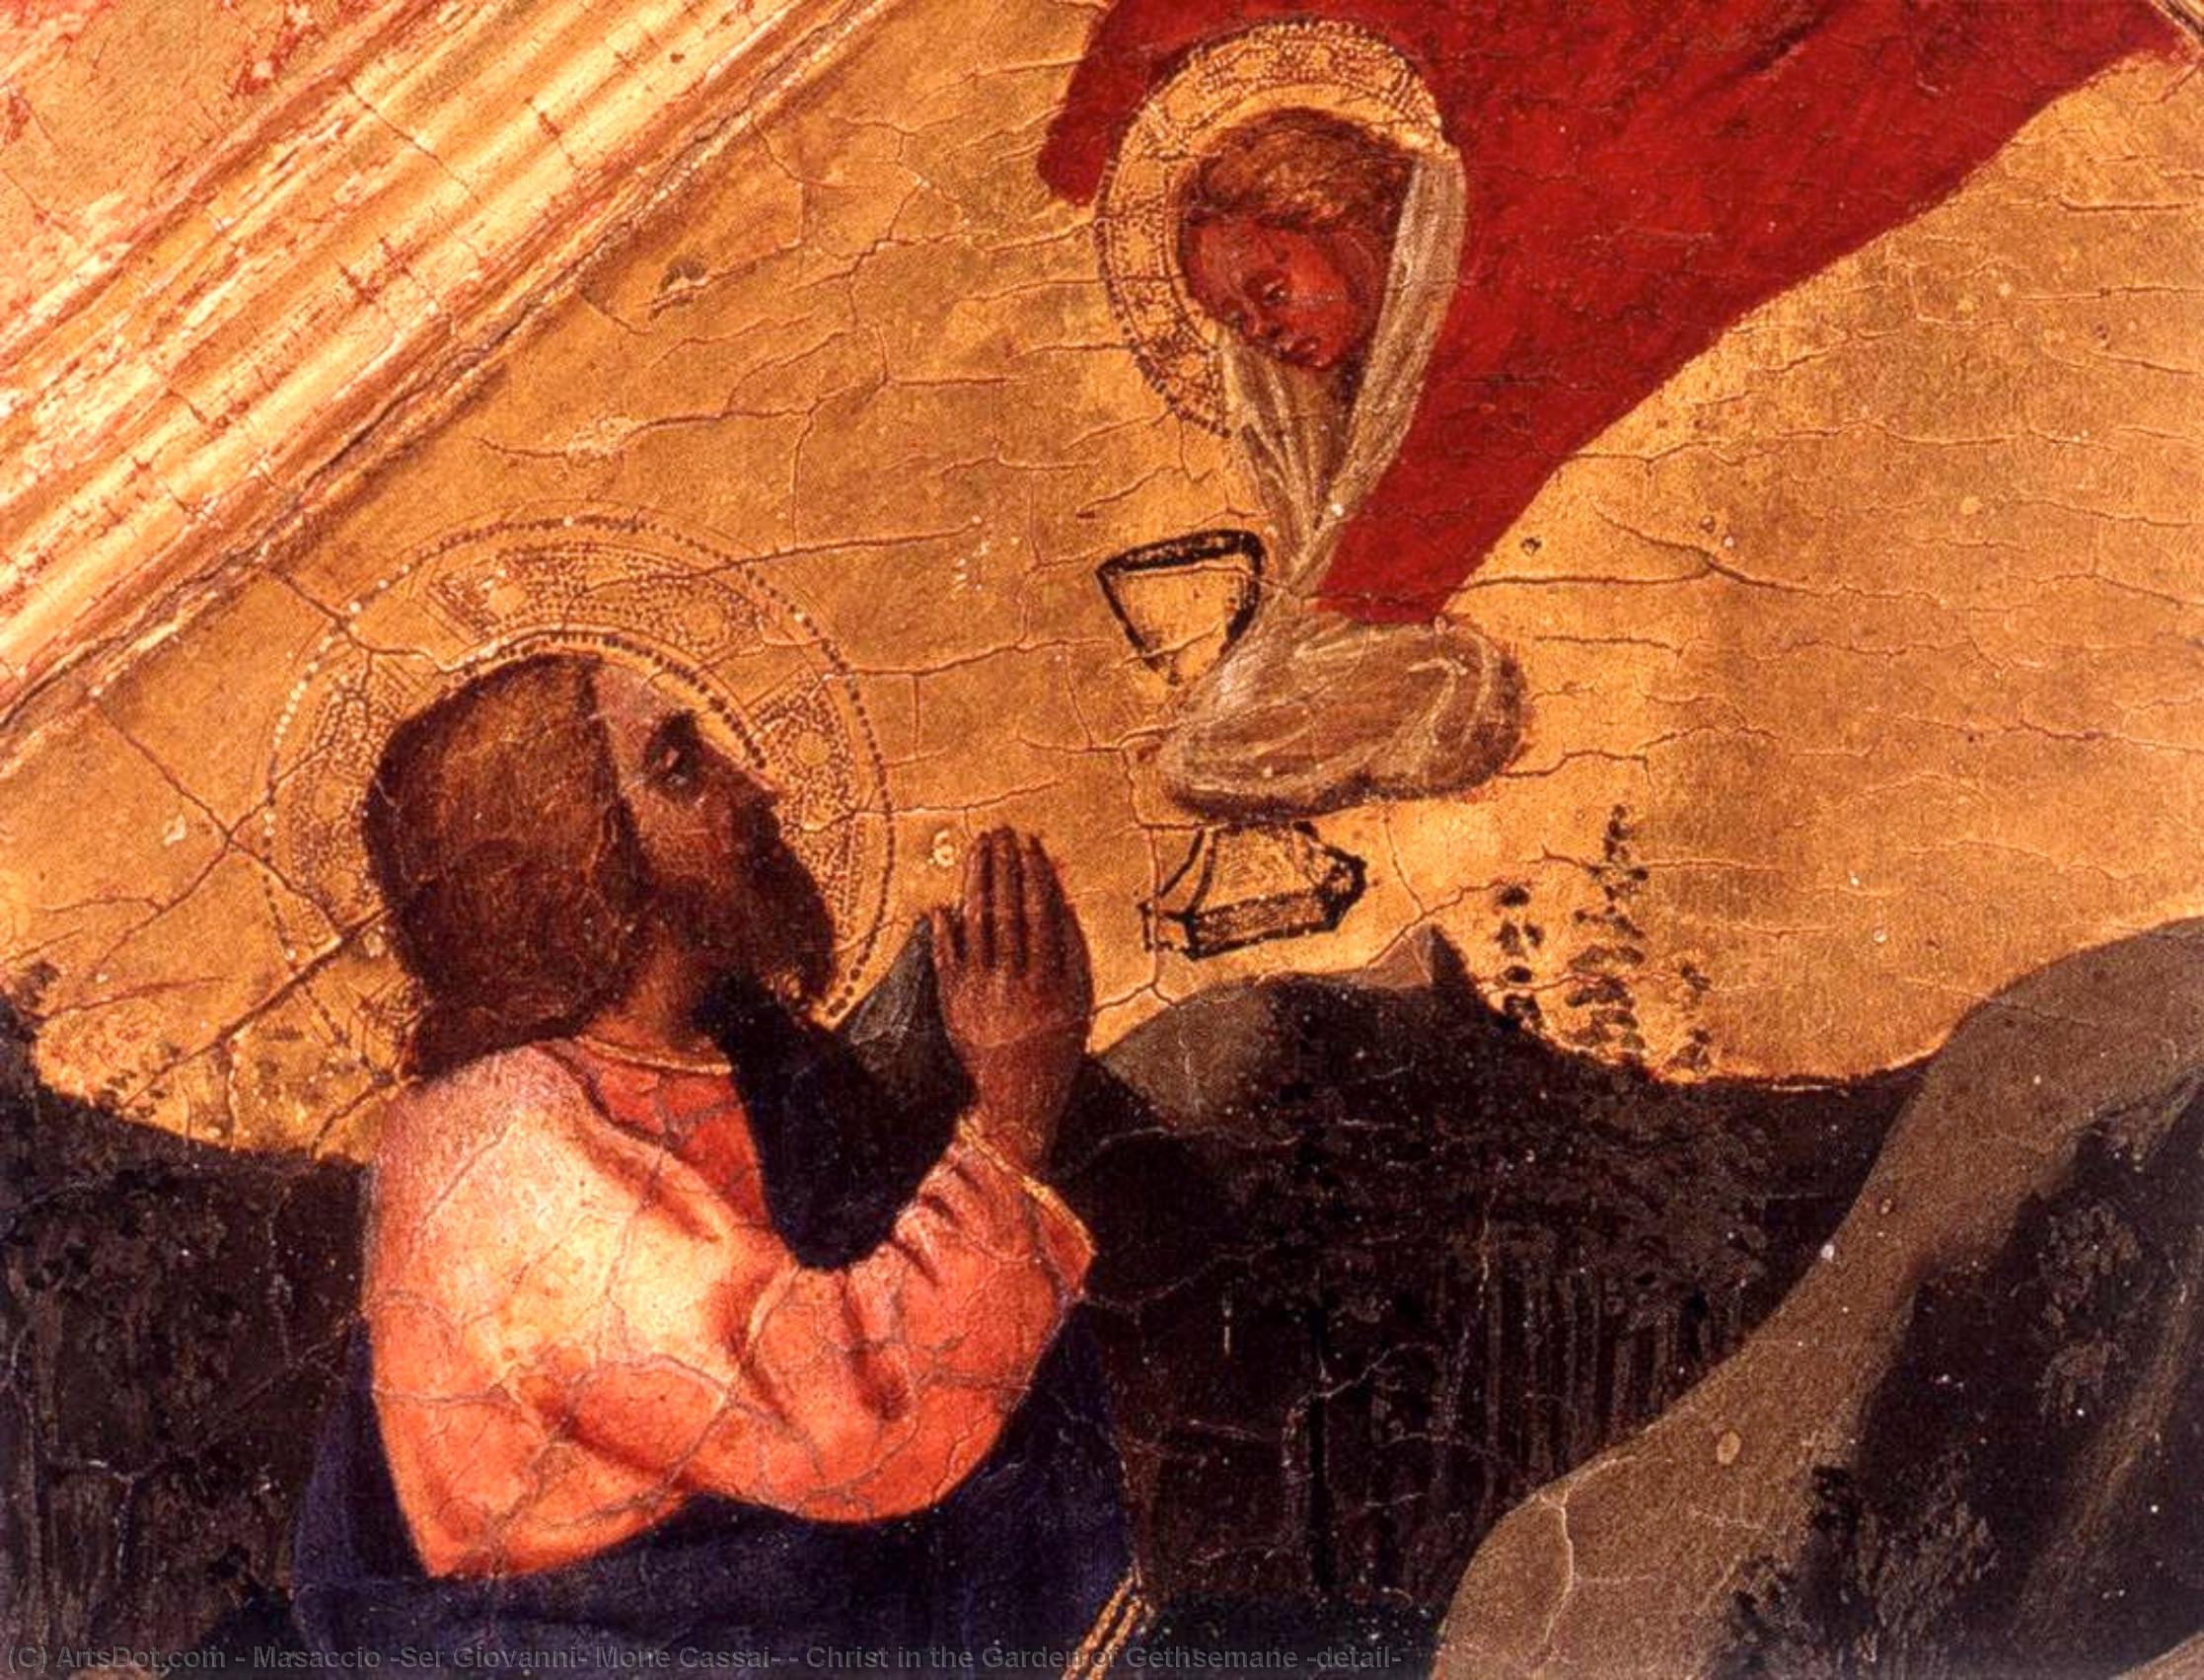 WikiOO.org - אנציקלופדיה לאמנויות יפות - ציור, יצירות אמנות Masaccio (Ser Giovanni, Mone Cassai) - Christ in the Garden of Gethsemane (detail)